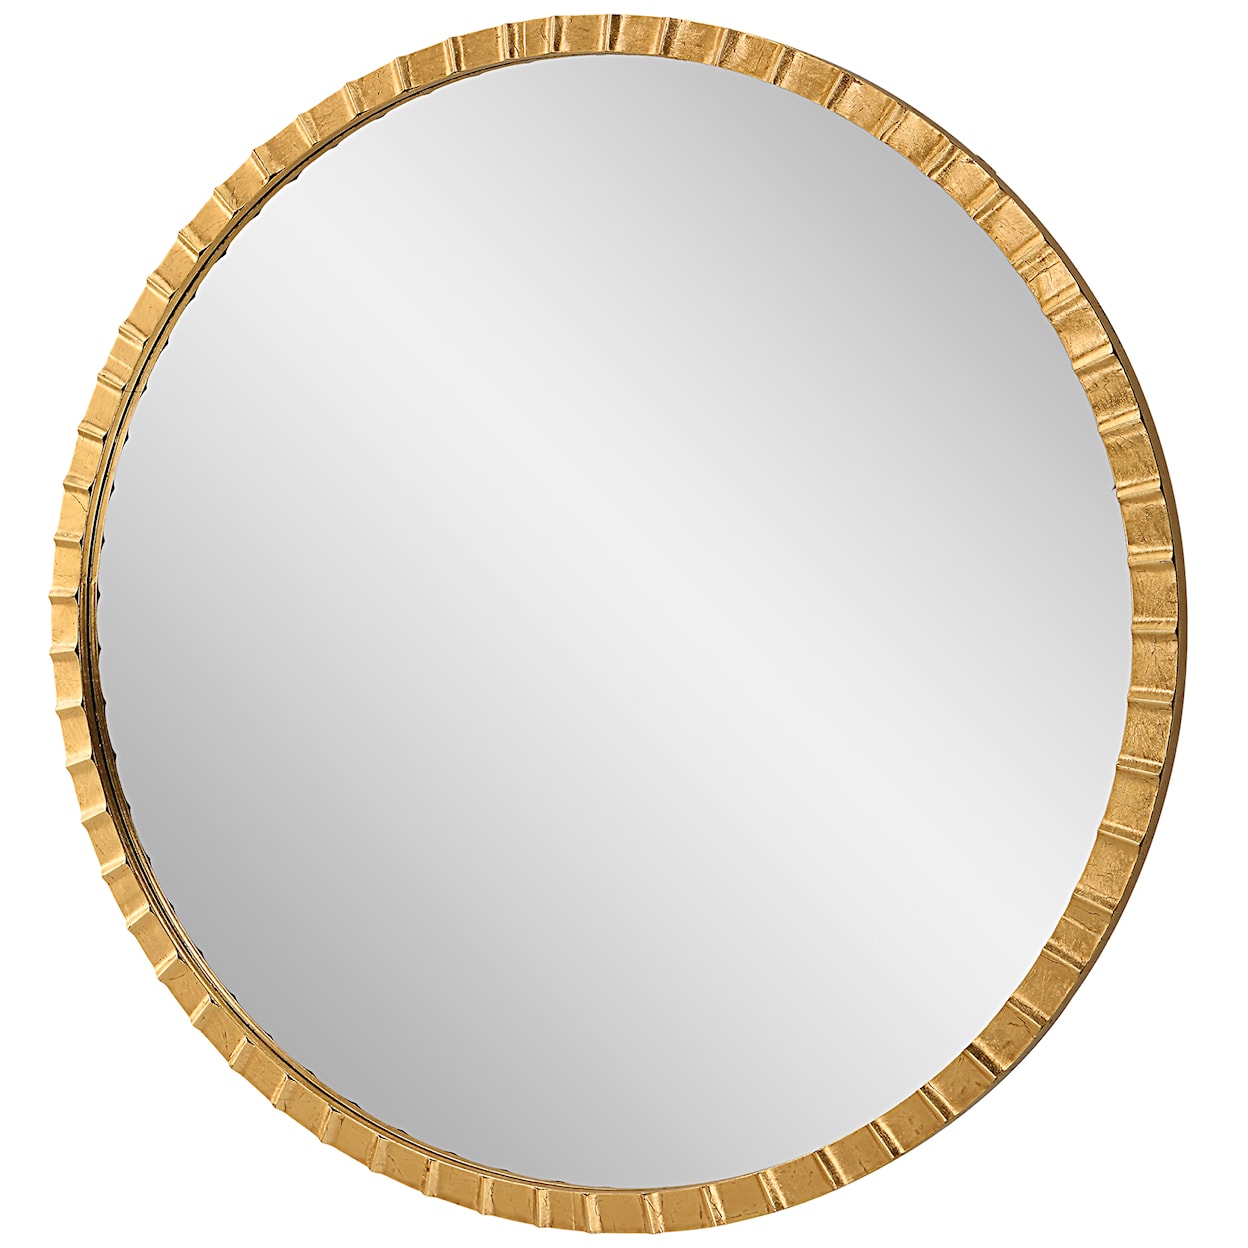 Uttermost Dandridge Dandridge Gold Round Mirror